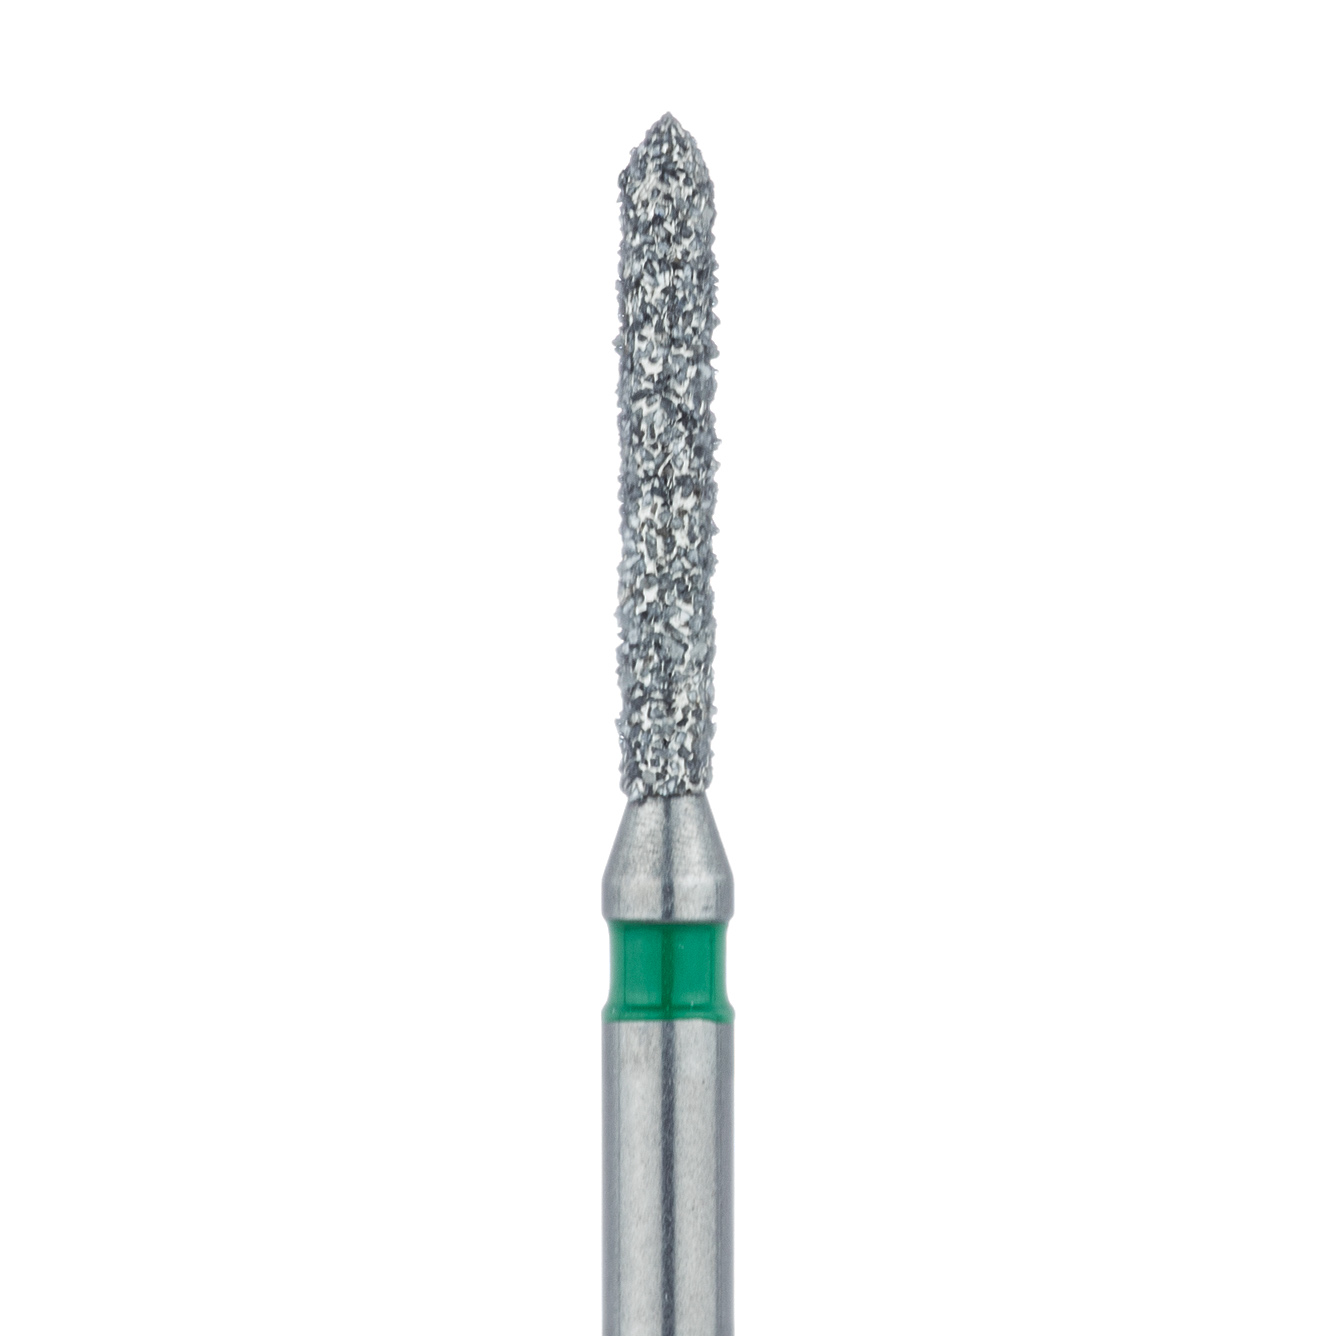 885G-012-FG Pointed Tip Cylinder Diamond Bur 1.2mm Coarse, FG